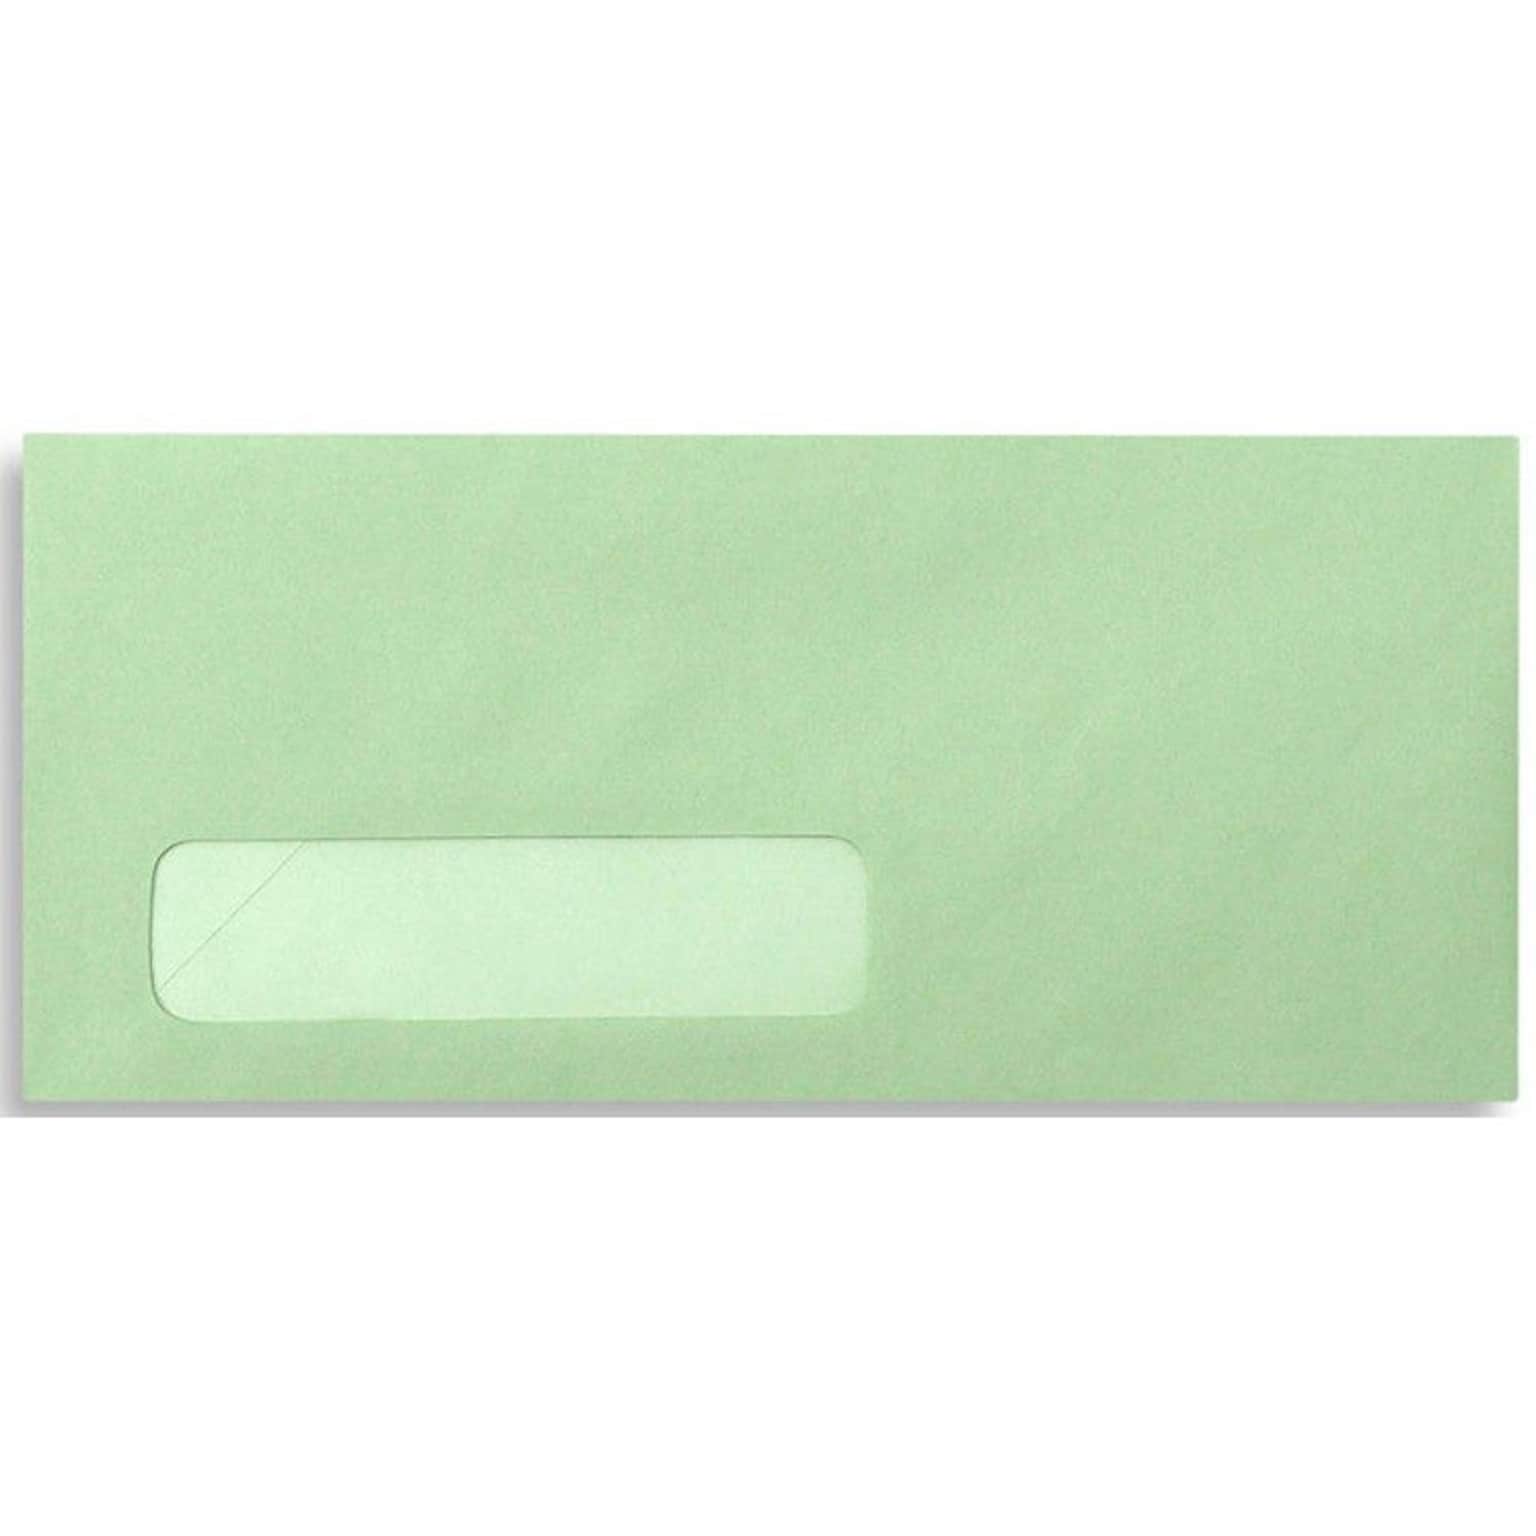 LUX Pastels Moistenable Glue #10 Window Envelope, 4 1/2 x 9 1/2, Pastel Green, 250/Box (4058-250)